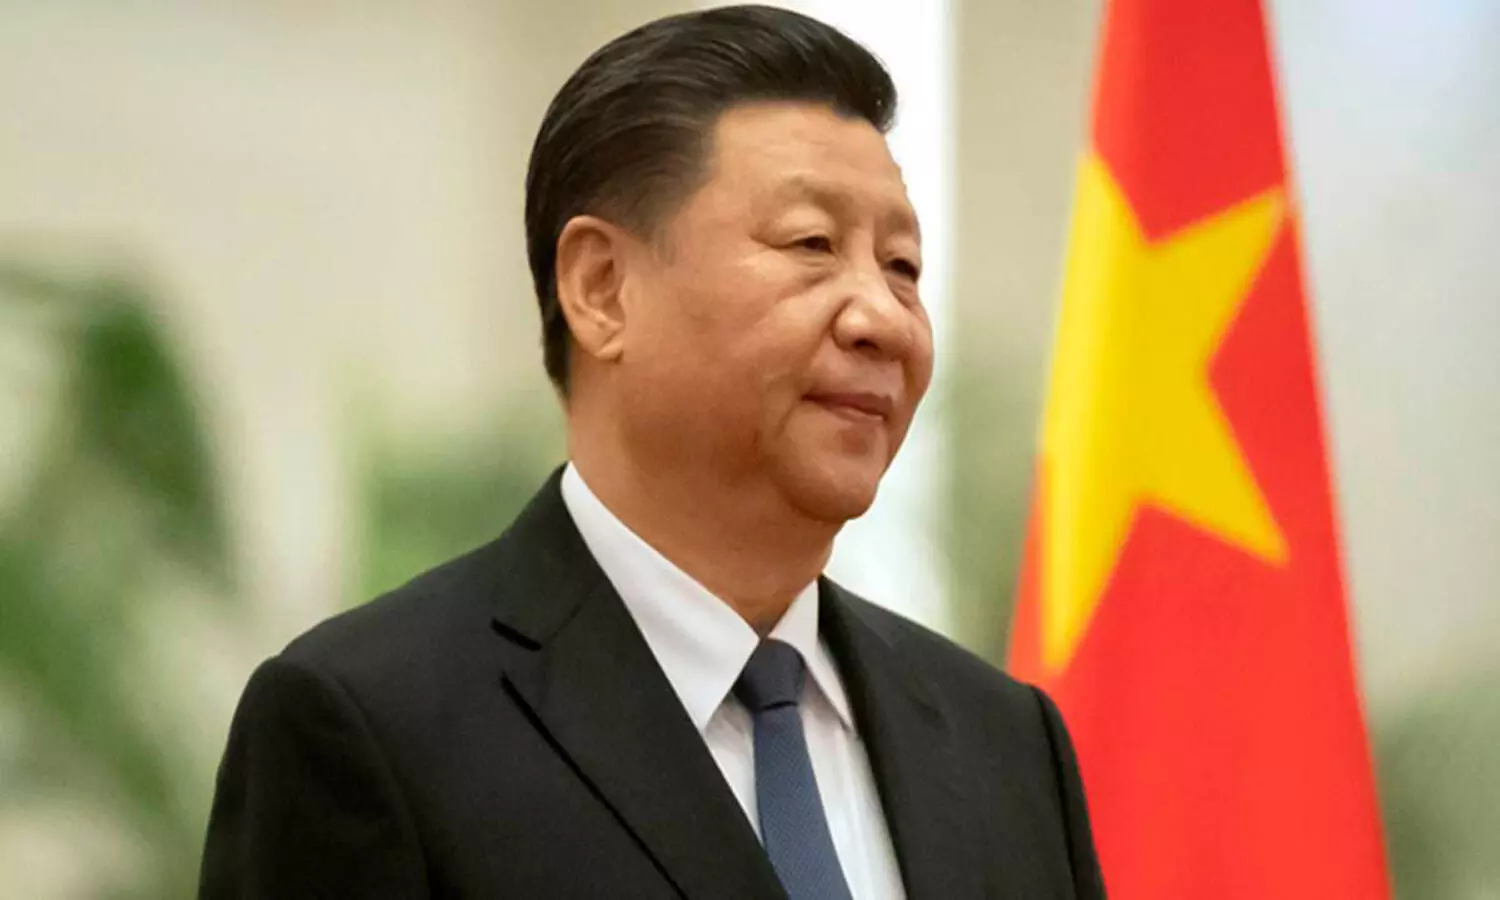 Xi Jinping invokes Mao Zedong in visit to cradle of Communist revolution